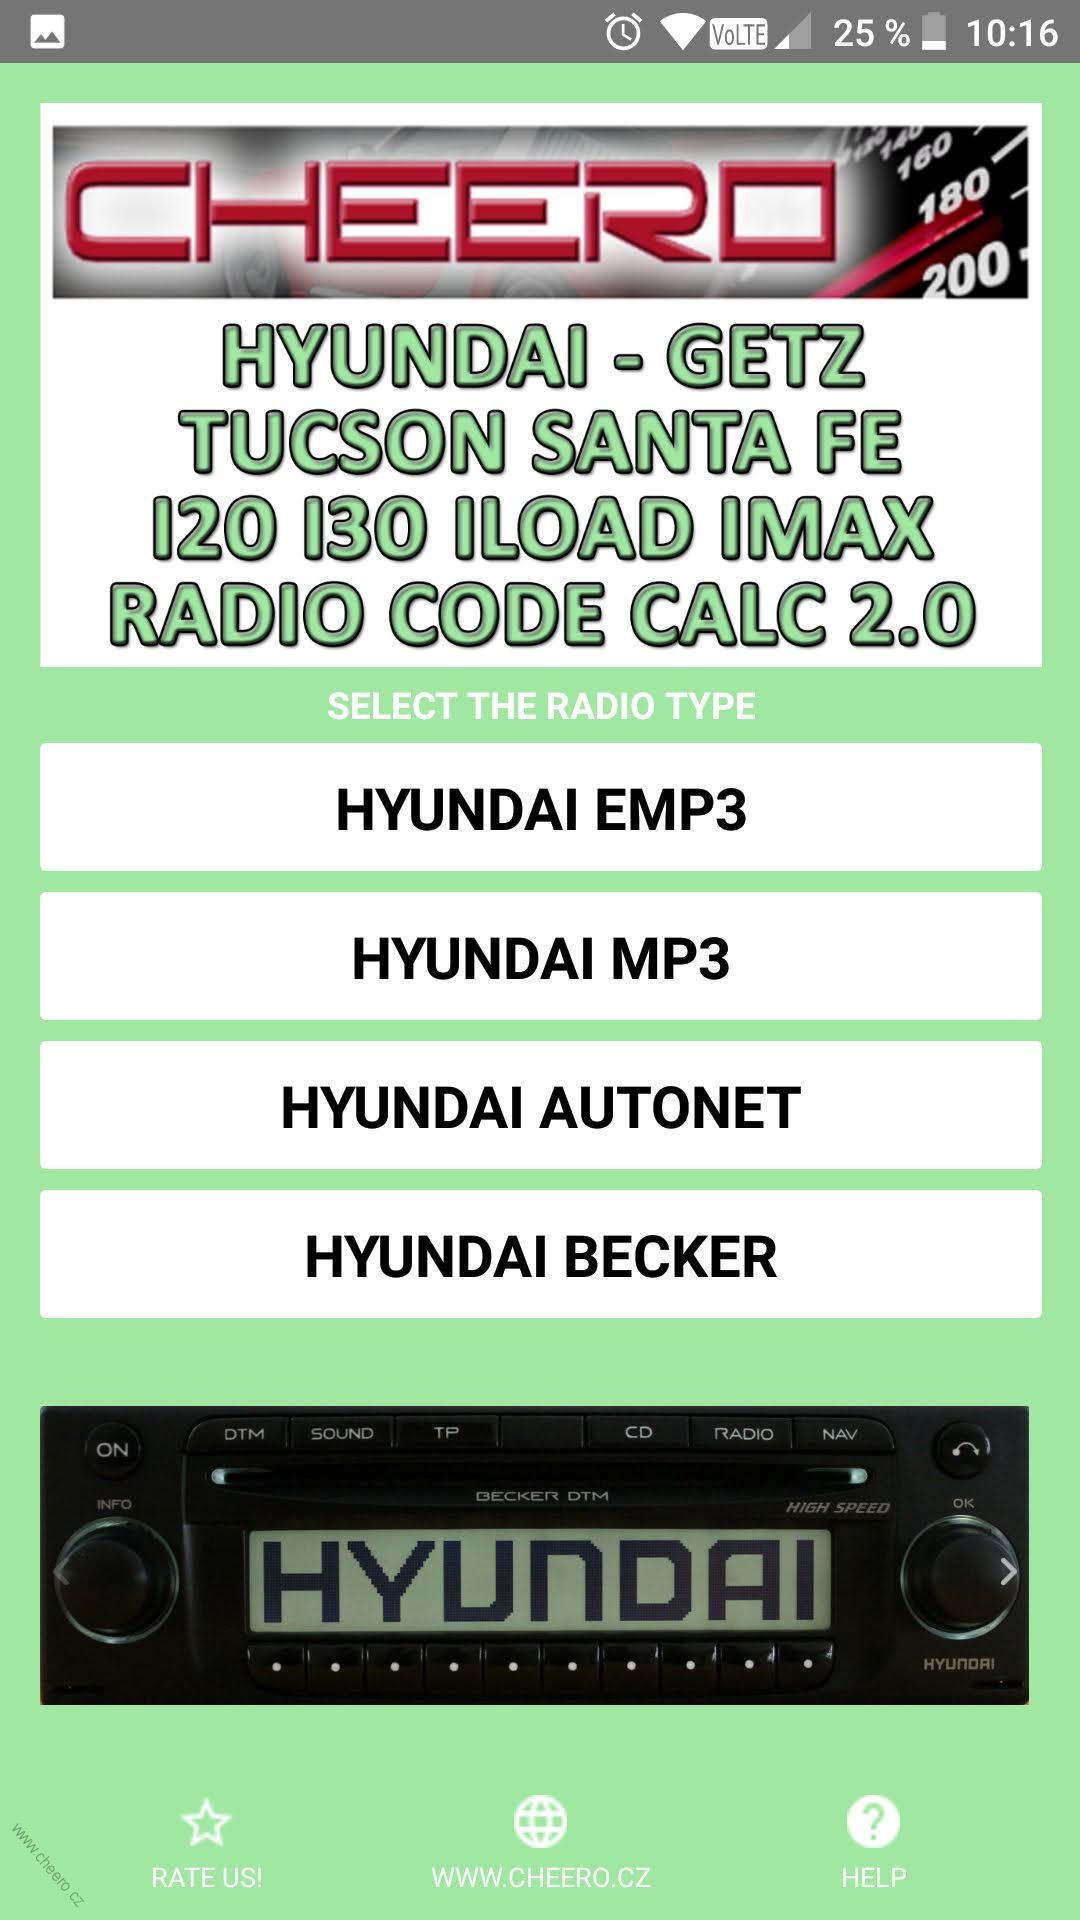 HYUNDAI GETZ TUCSON SANTAFE I20 I30 ILOAD IMAX - RADIO CODE CALC